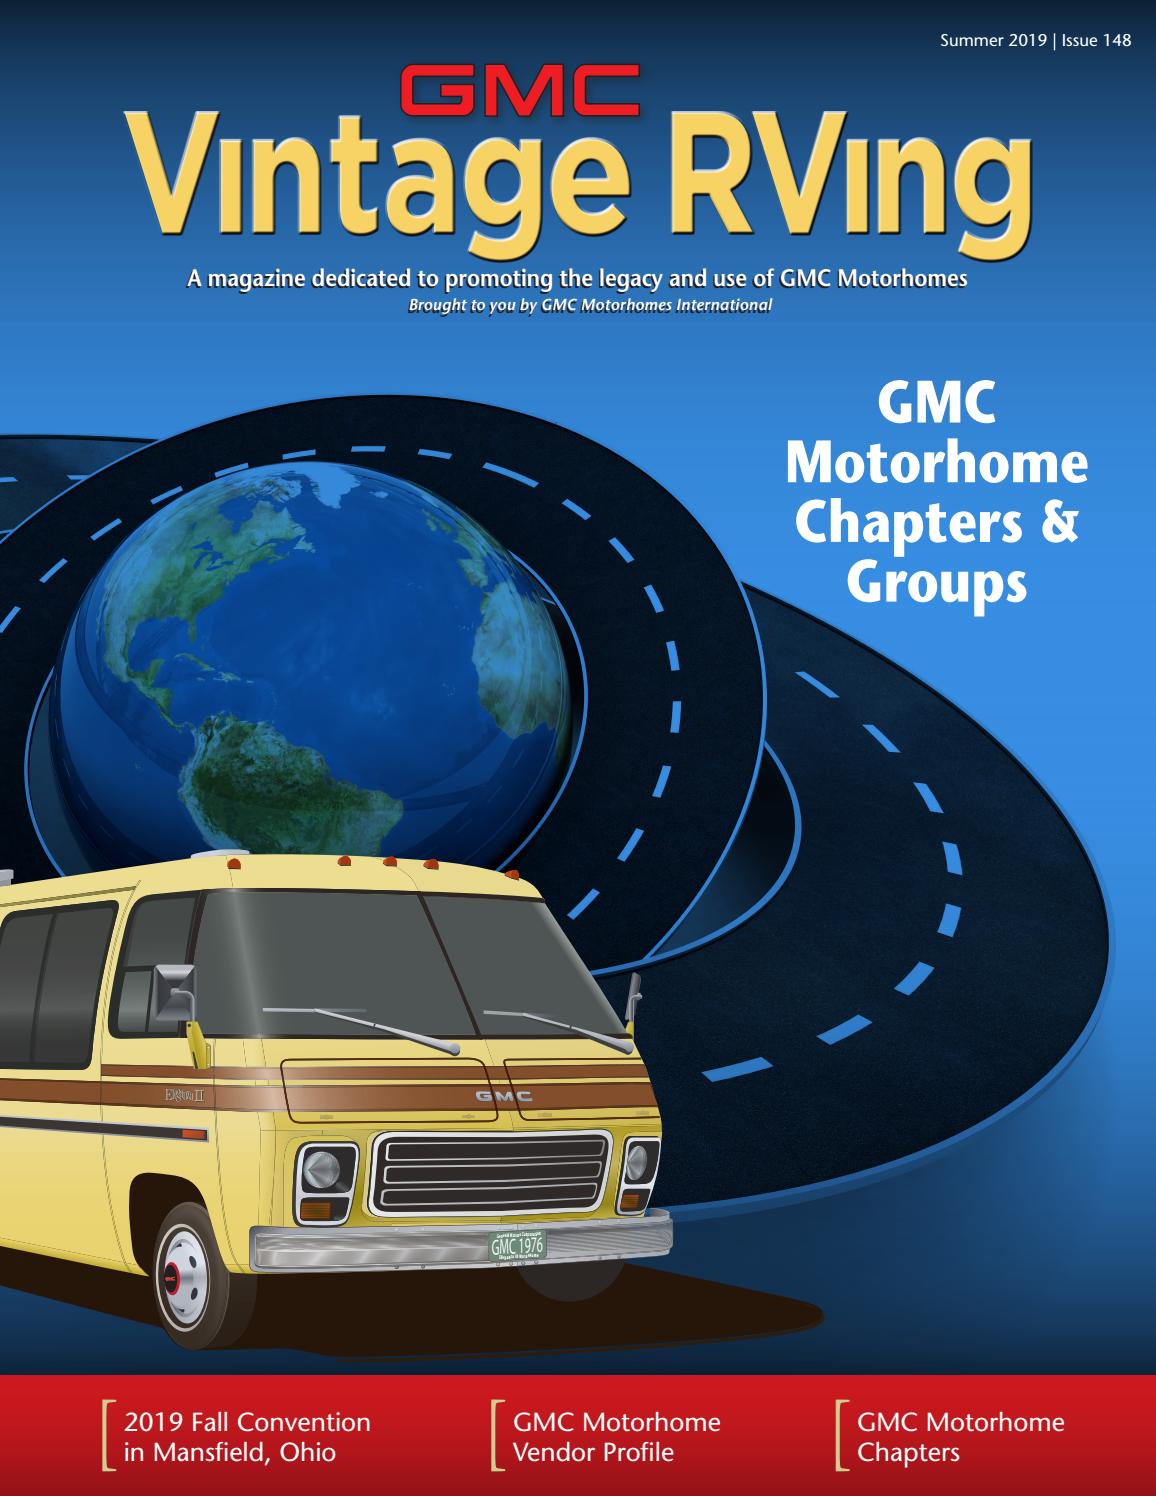 Original Dutchman Amish Fireplace Beautiful Gmc Vintage Rving Magazine Summer 2019 by Ceva Design issuu